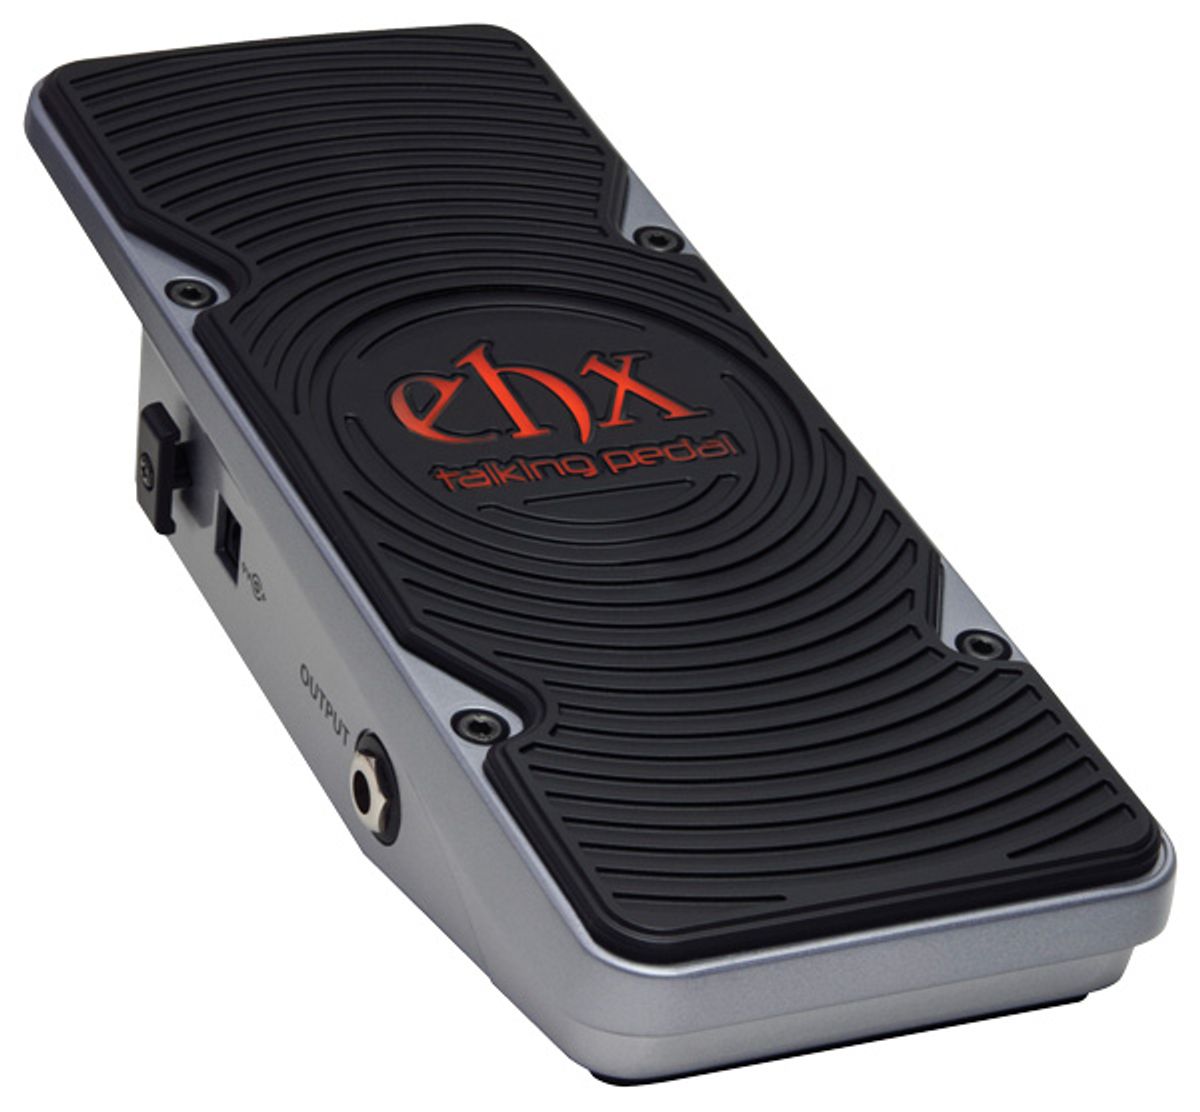 Electro-Harmonix Next Step Talking Pedal Review